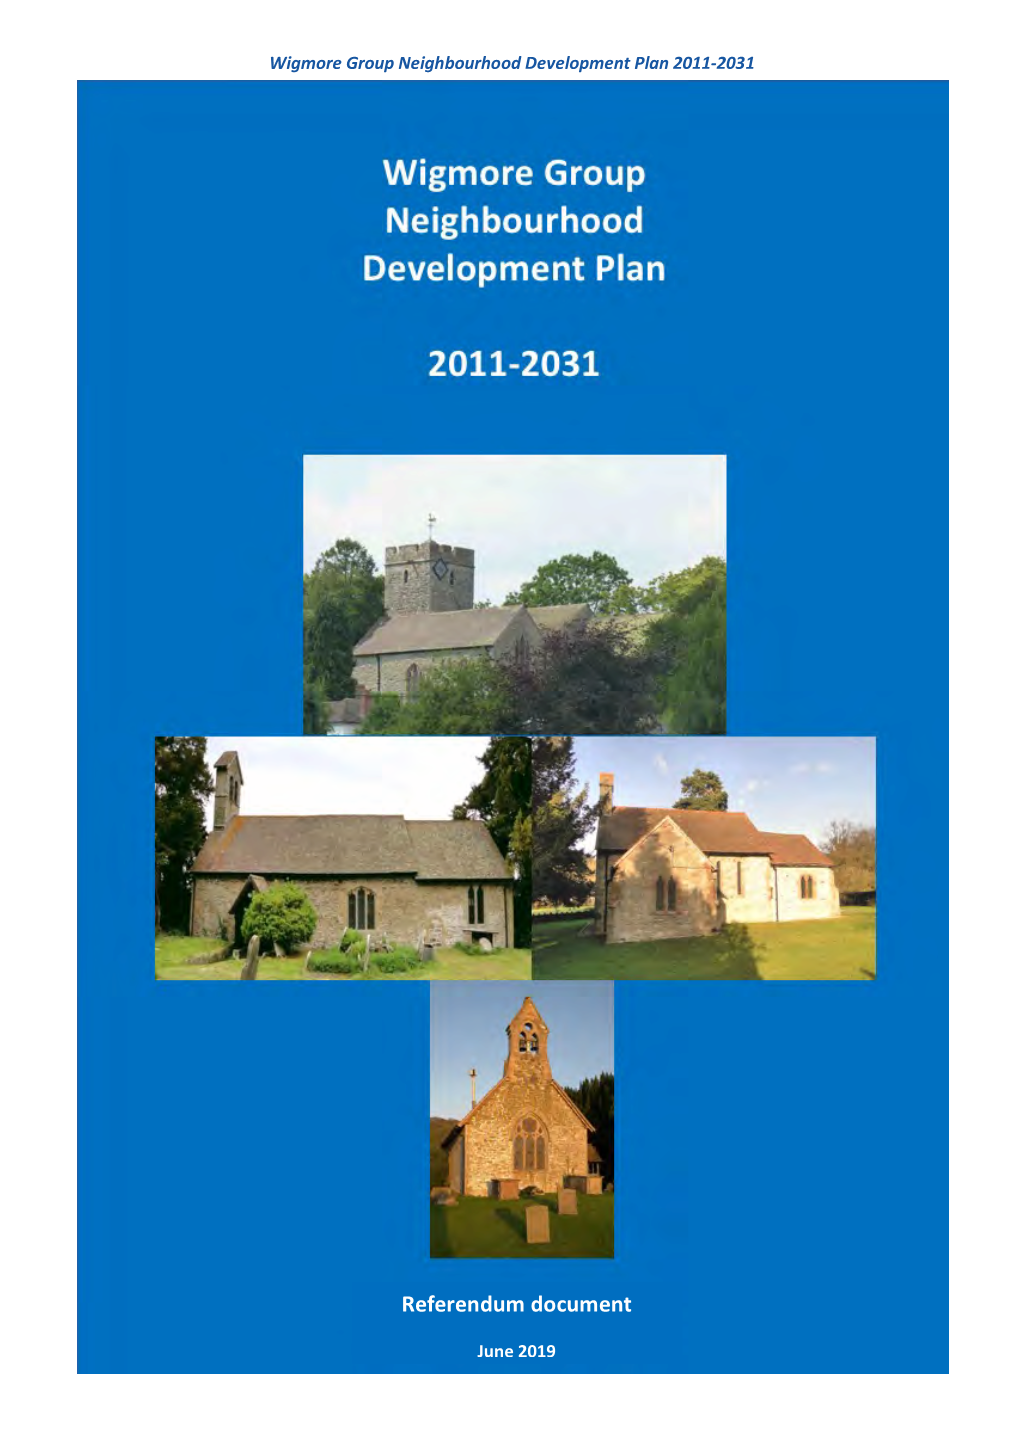 Wigmore Group Neighbourhood Plan June 2019